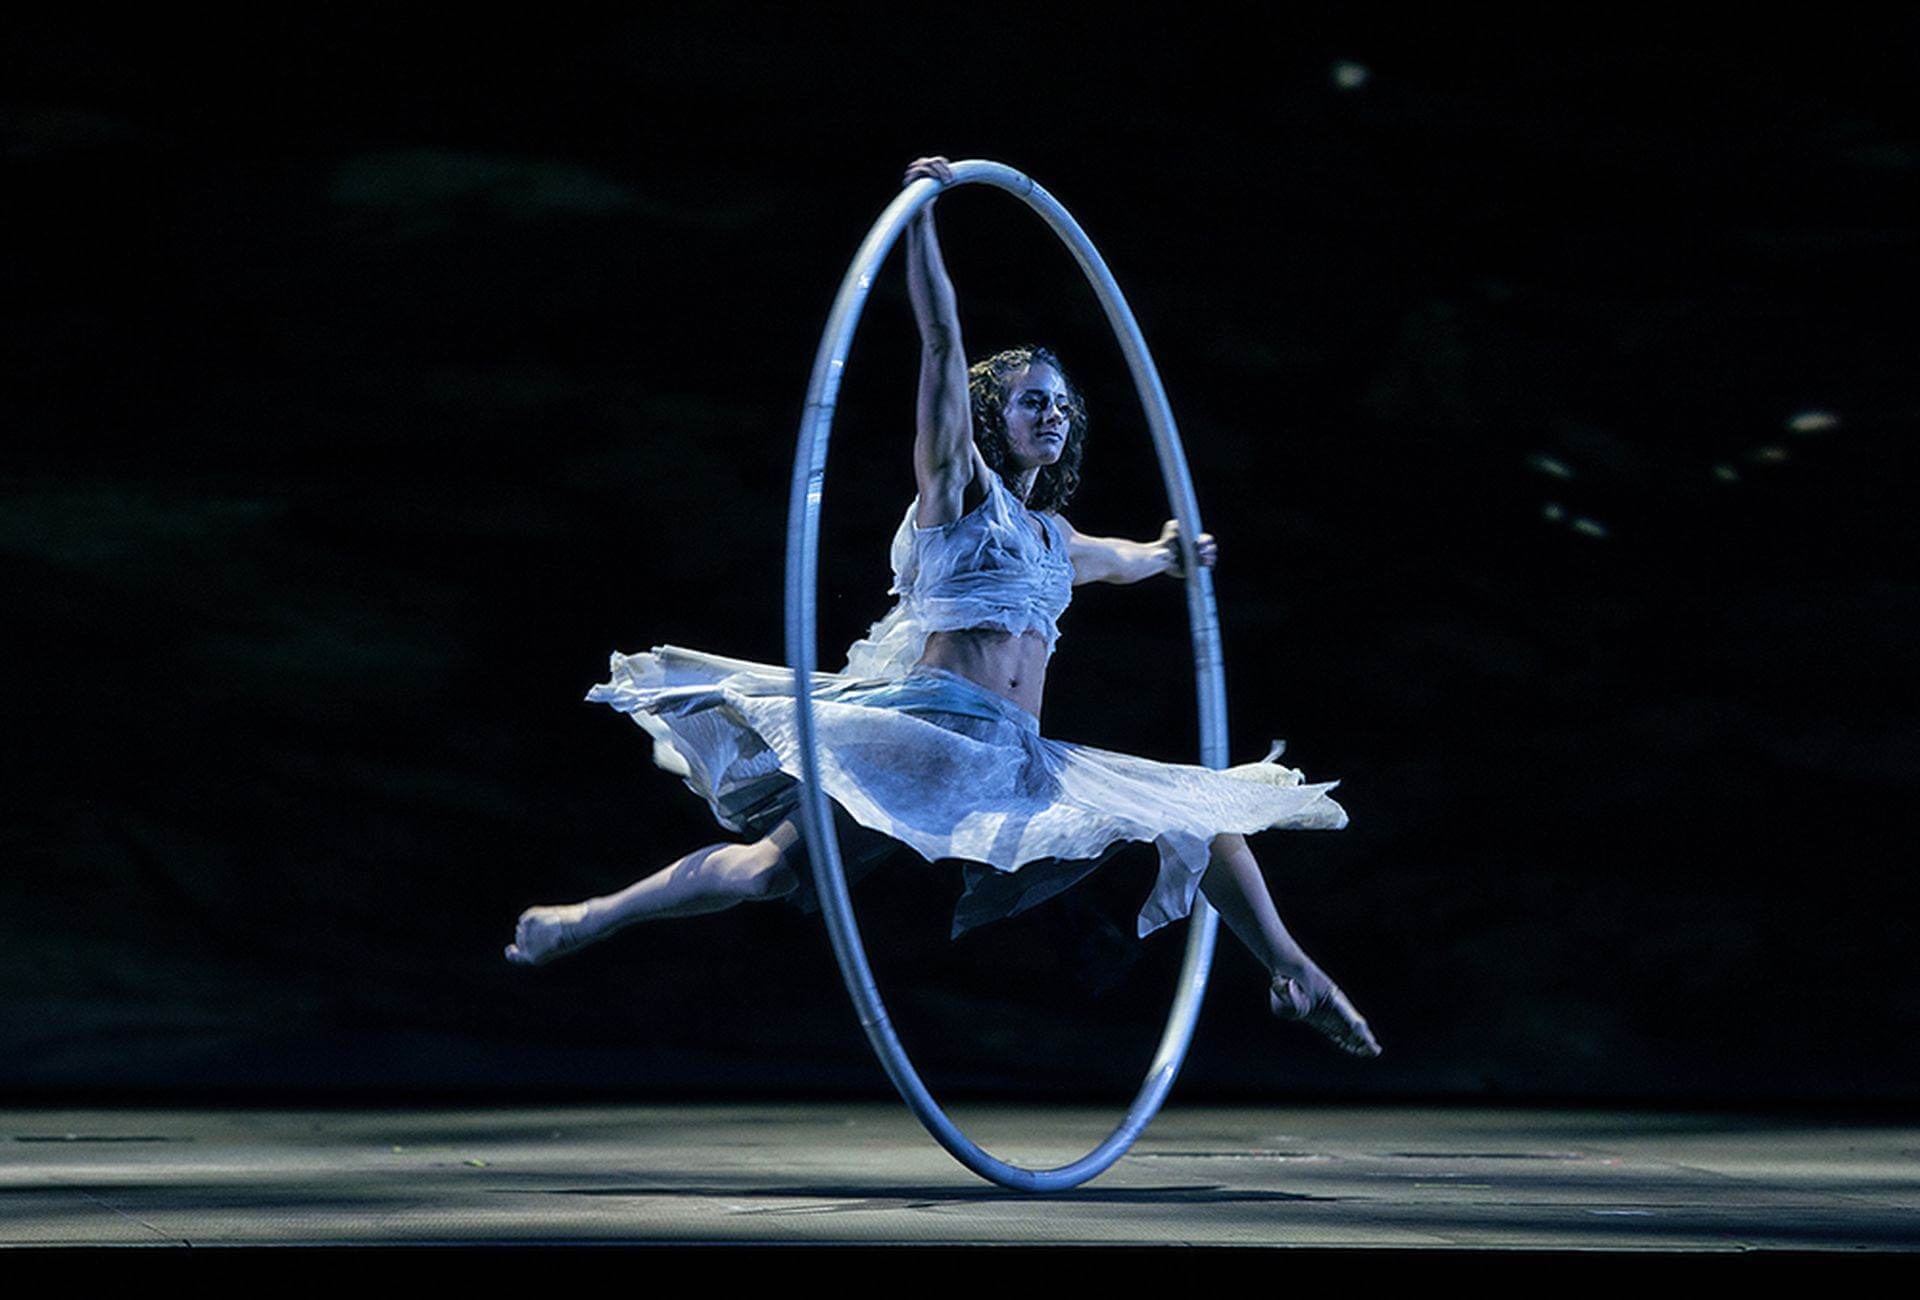 Scalada - Mater Natura by Cirque du Soleil 2014: Exercicis d'equilibri i acrobàtics en roda